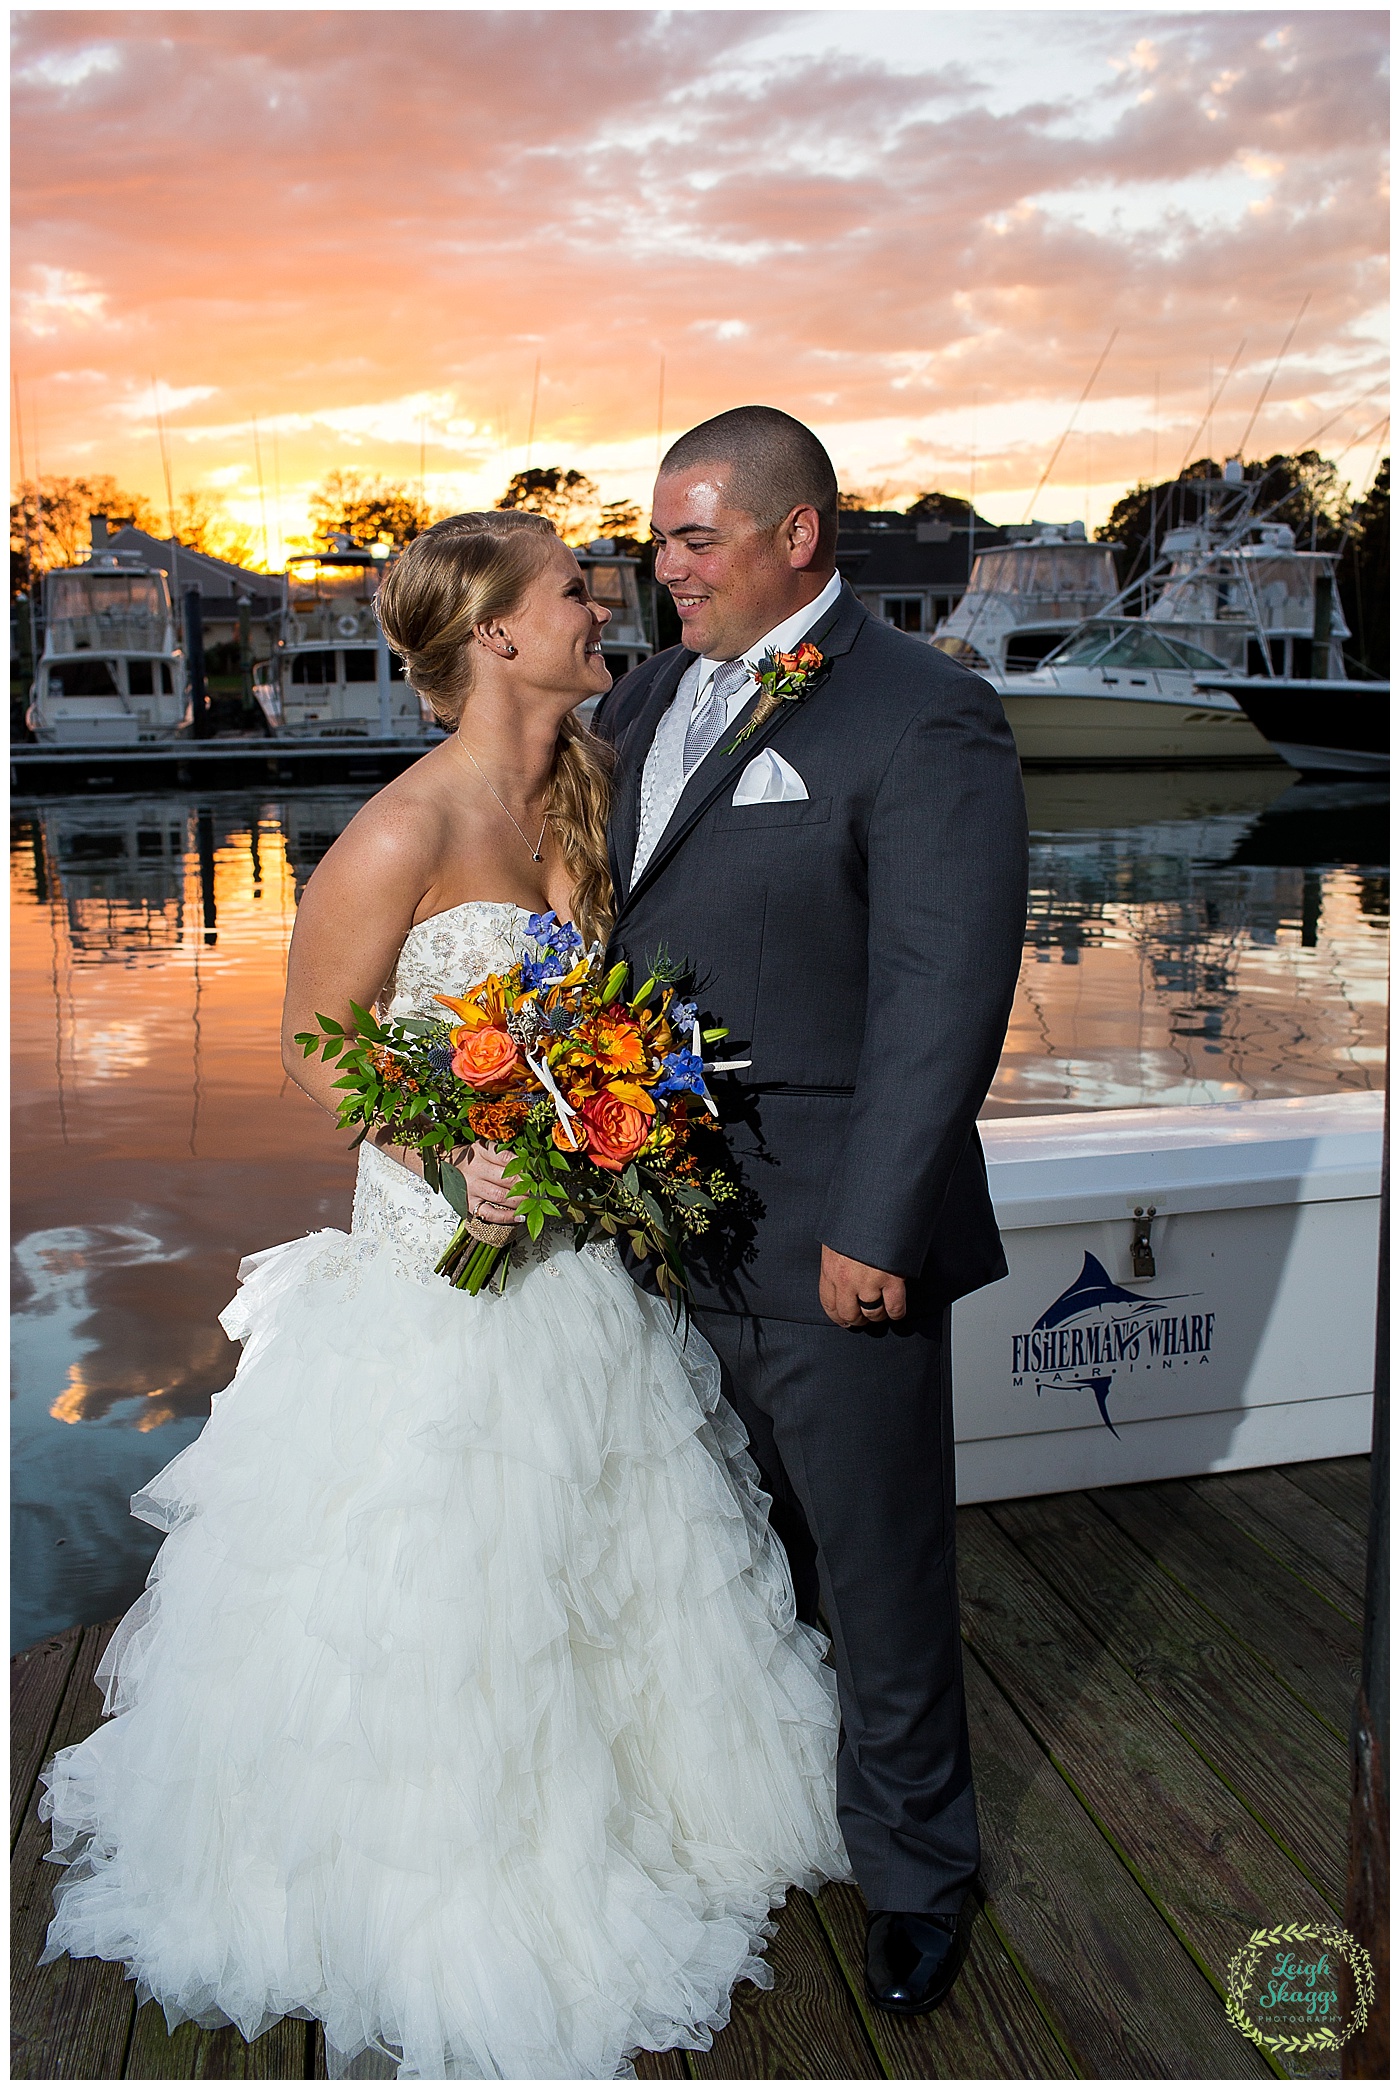 Marley & Dave are Married!  A sneak peek of their Water Table wedding in Virginia Beach!